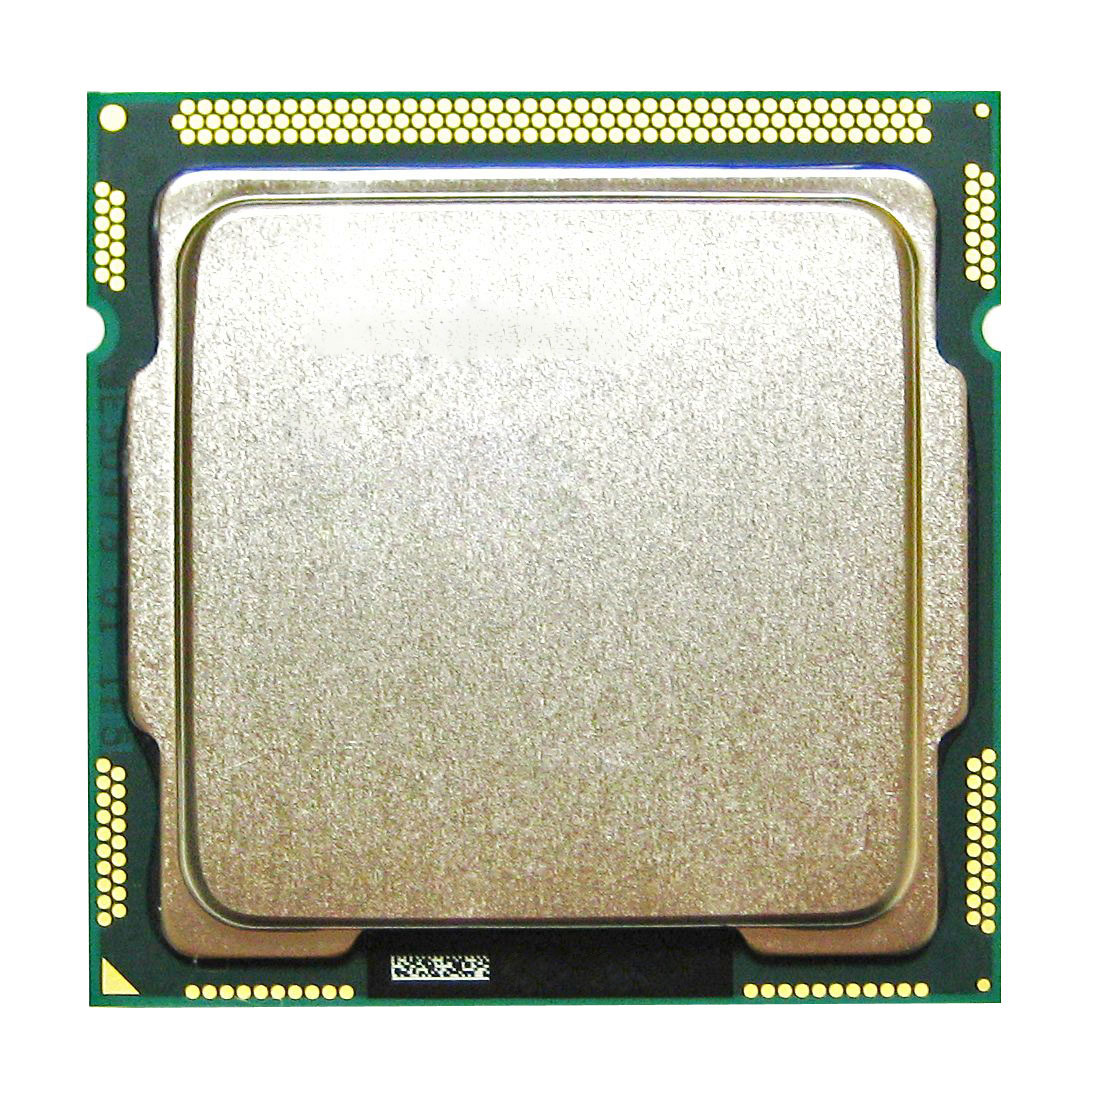 663350-001 HP 2.30GHz 5.00GT/s DMI 6MB L3 Cache Intel Core i5-2500T Quad Core Desktop Processor Upgrade